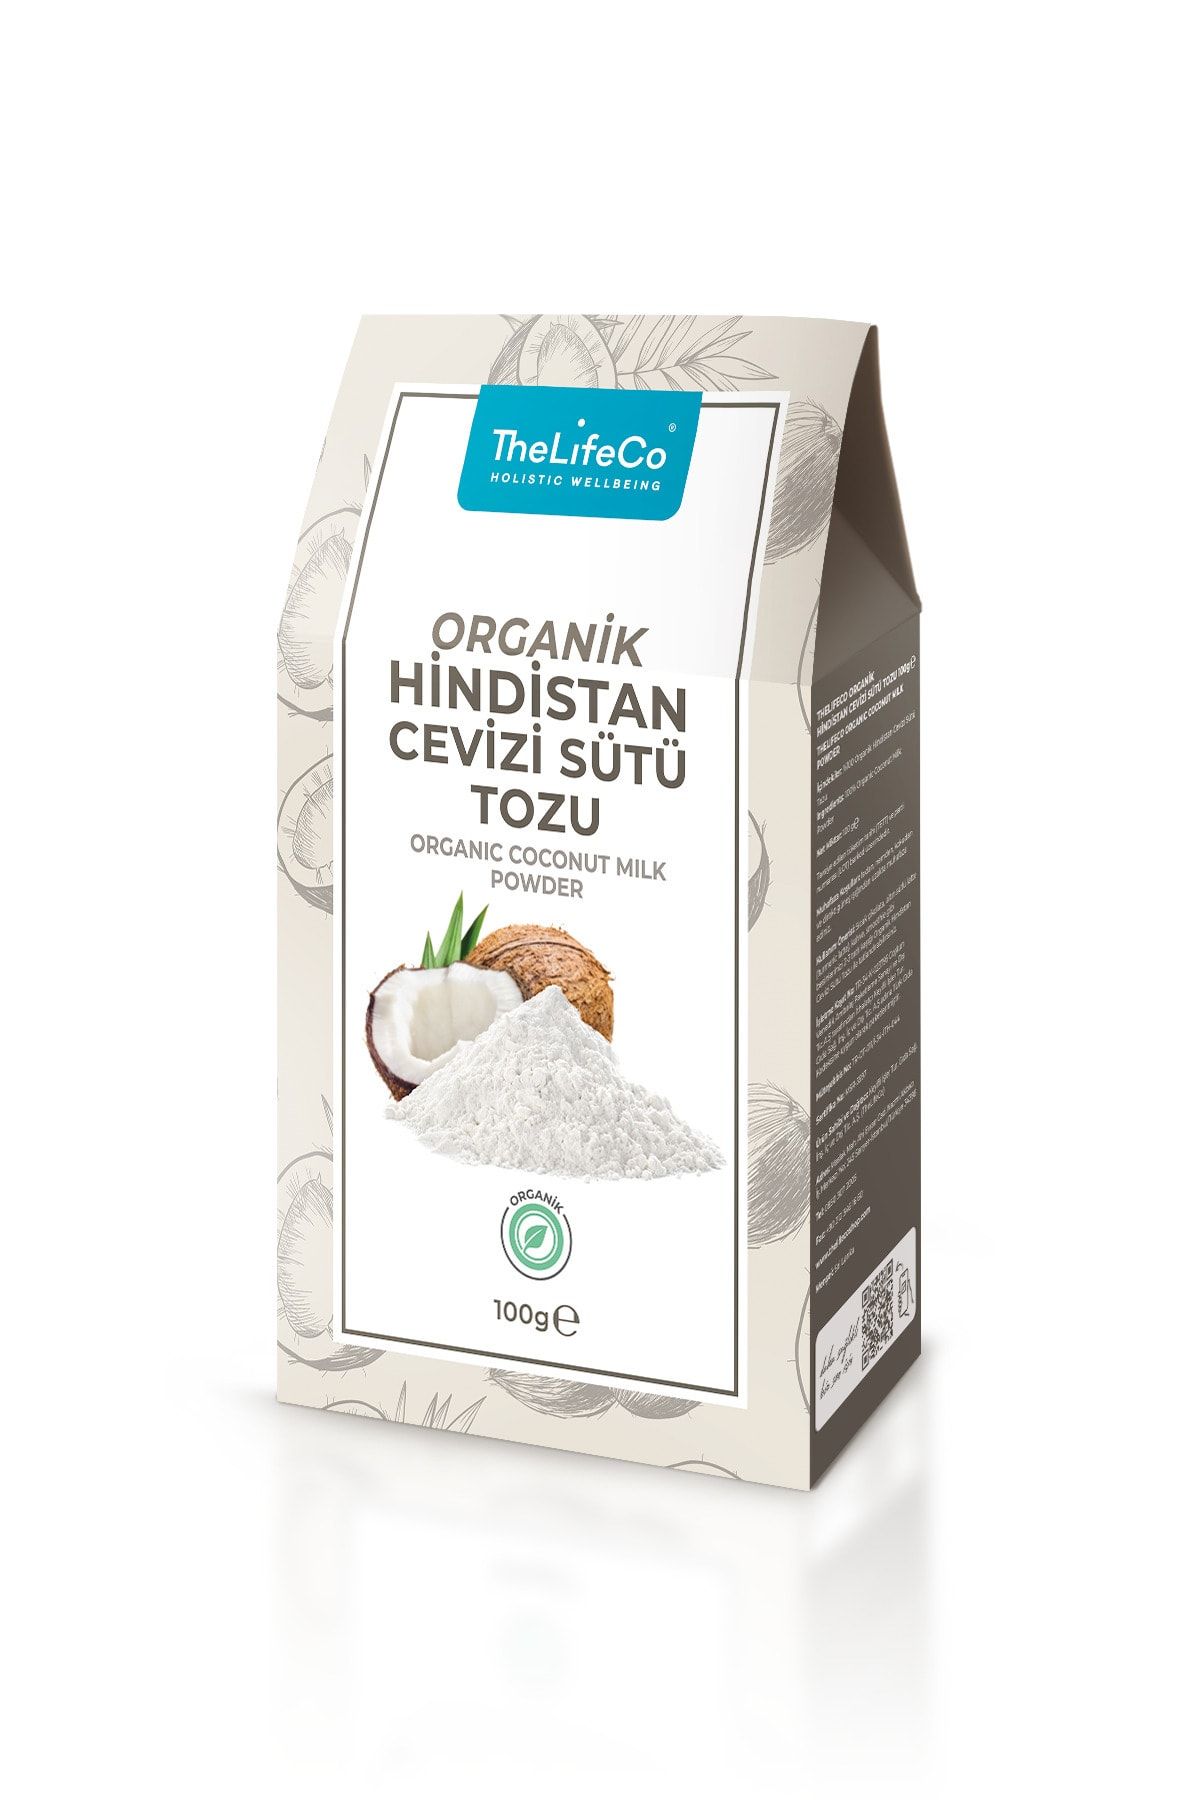 TheLifeCo Organik Hindistan Cevizi Sütü Tozu 100 G (glutensiz, Vegan)